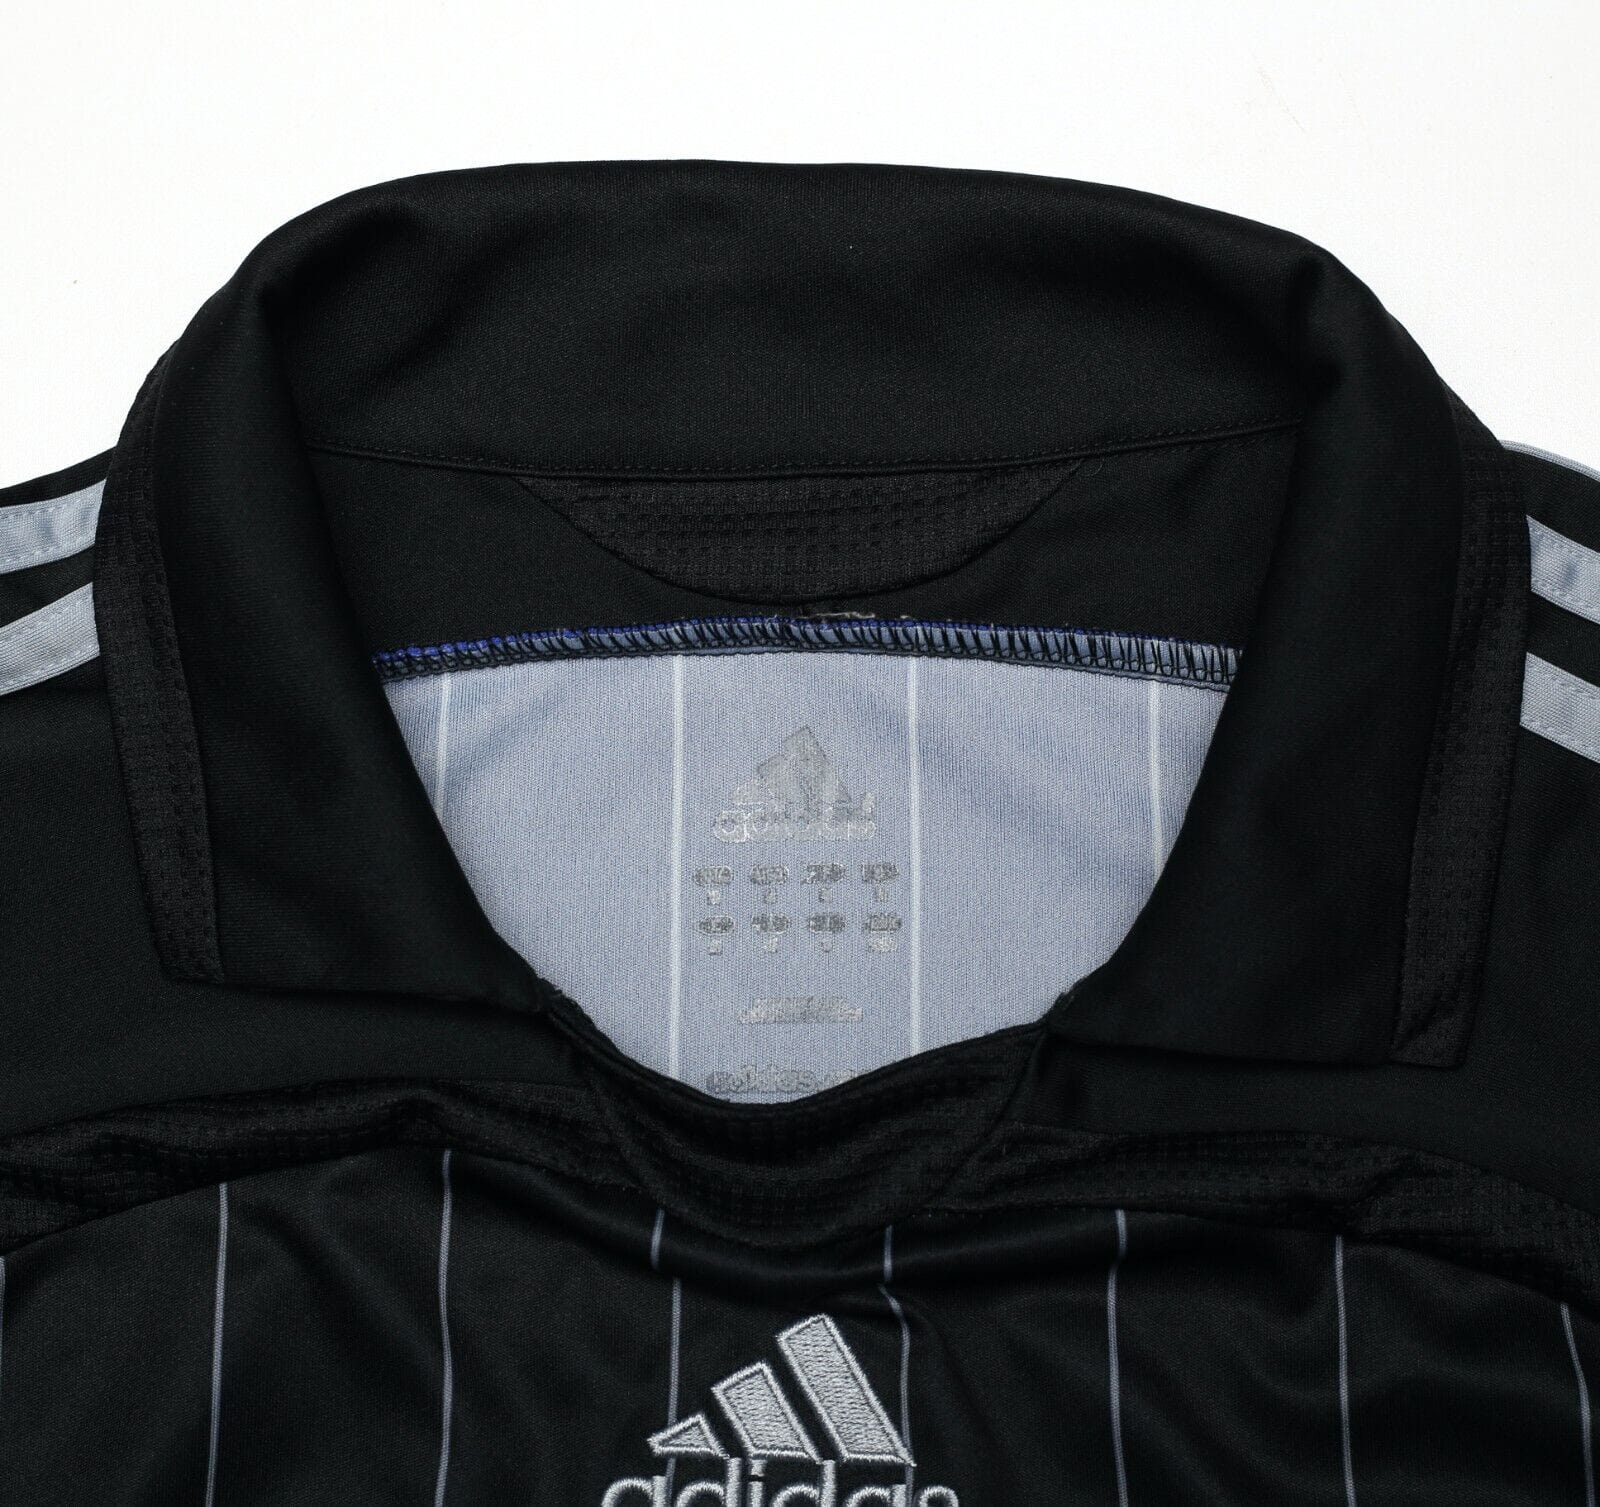 2006/07 DROGBA #11 Chelsea Vintage adidas UCL Away Football Shirt Jersey (M)